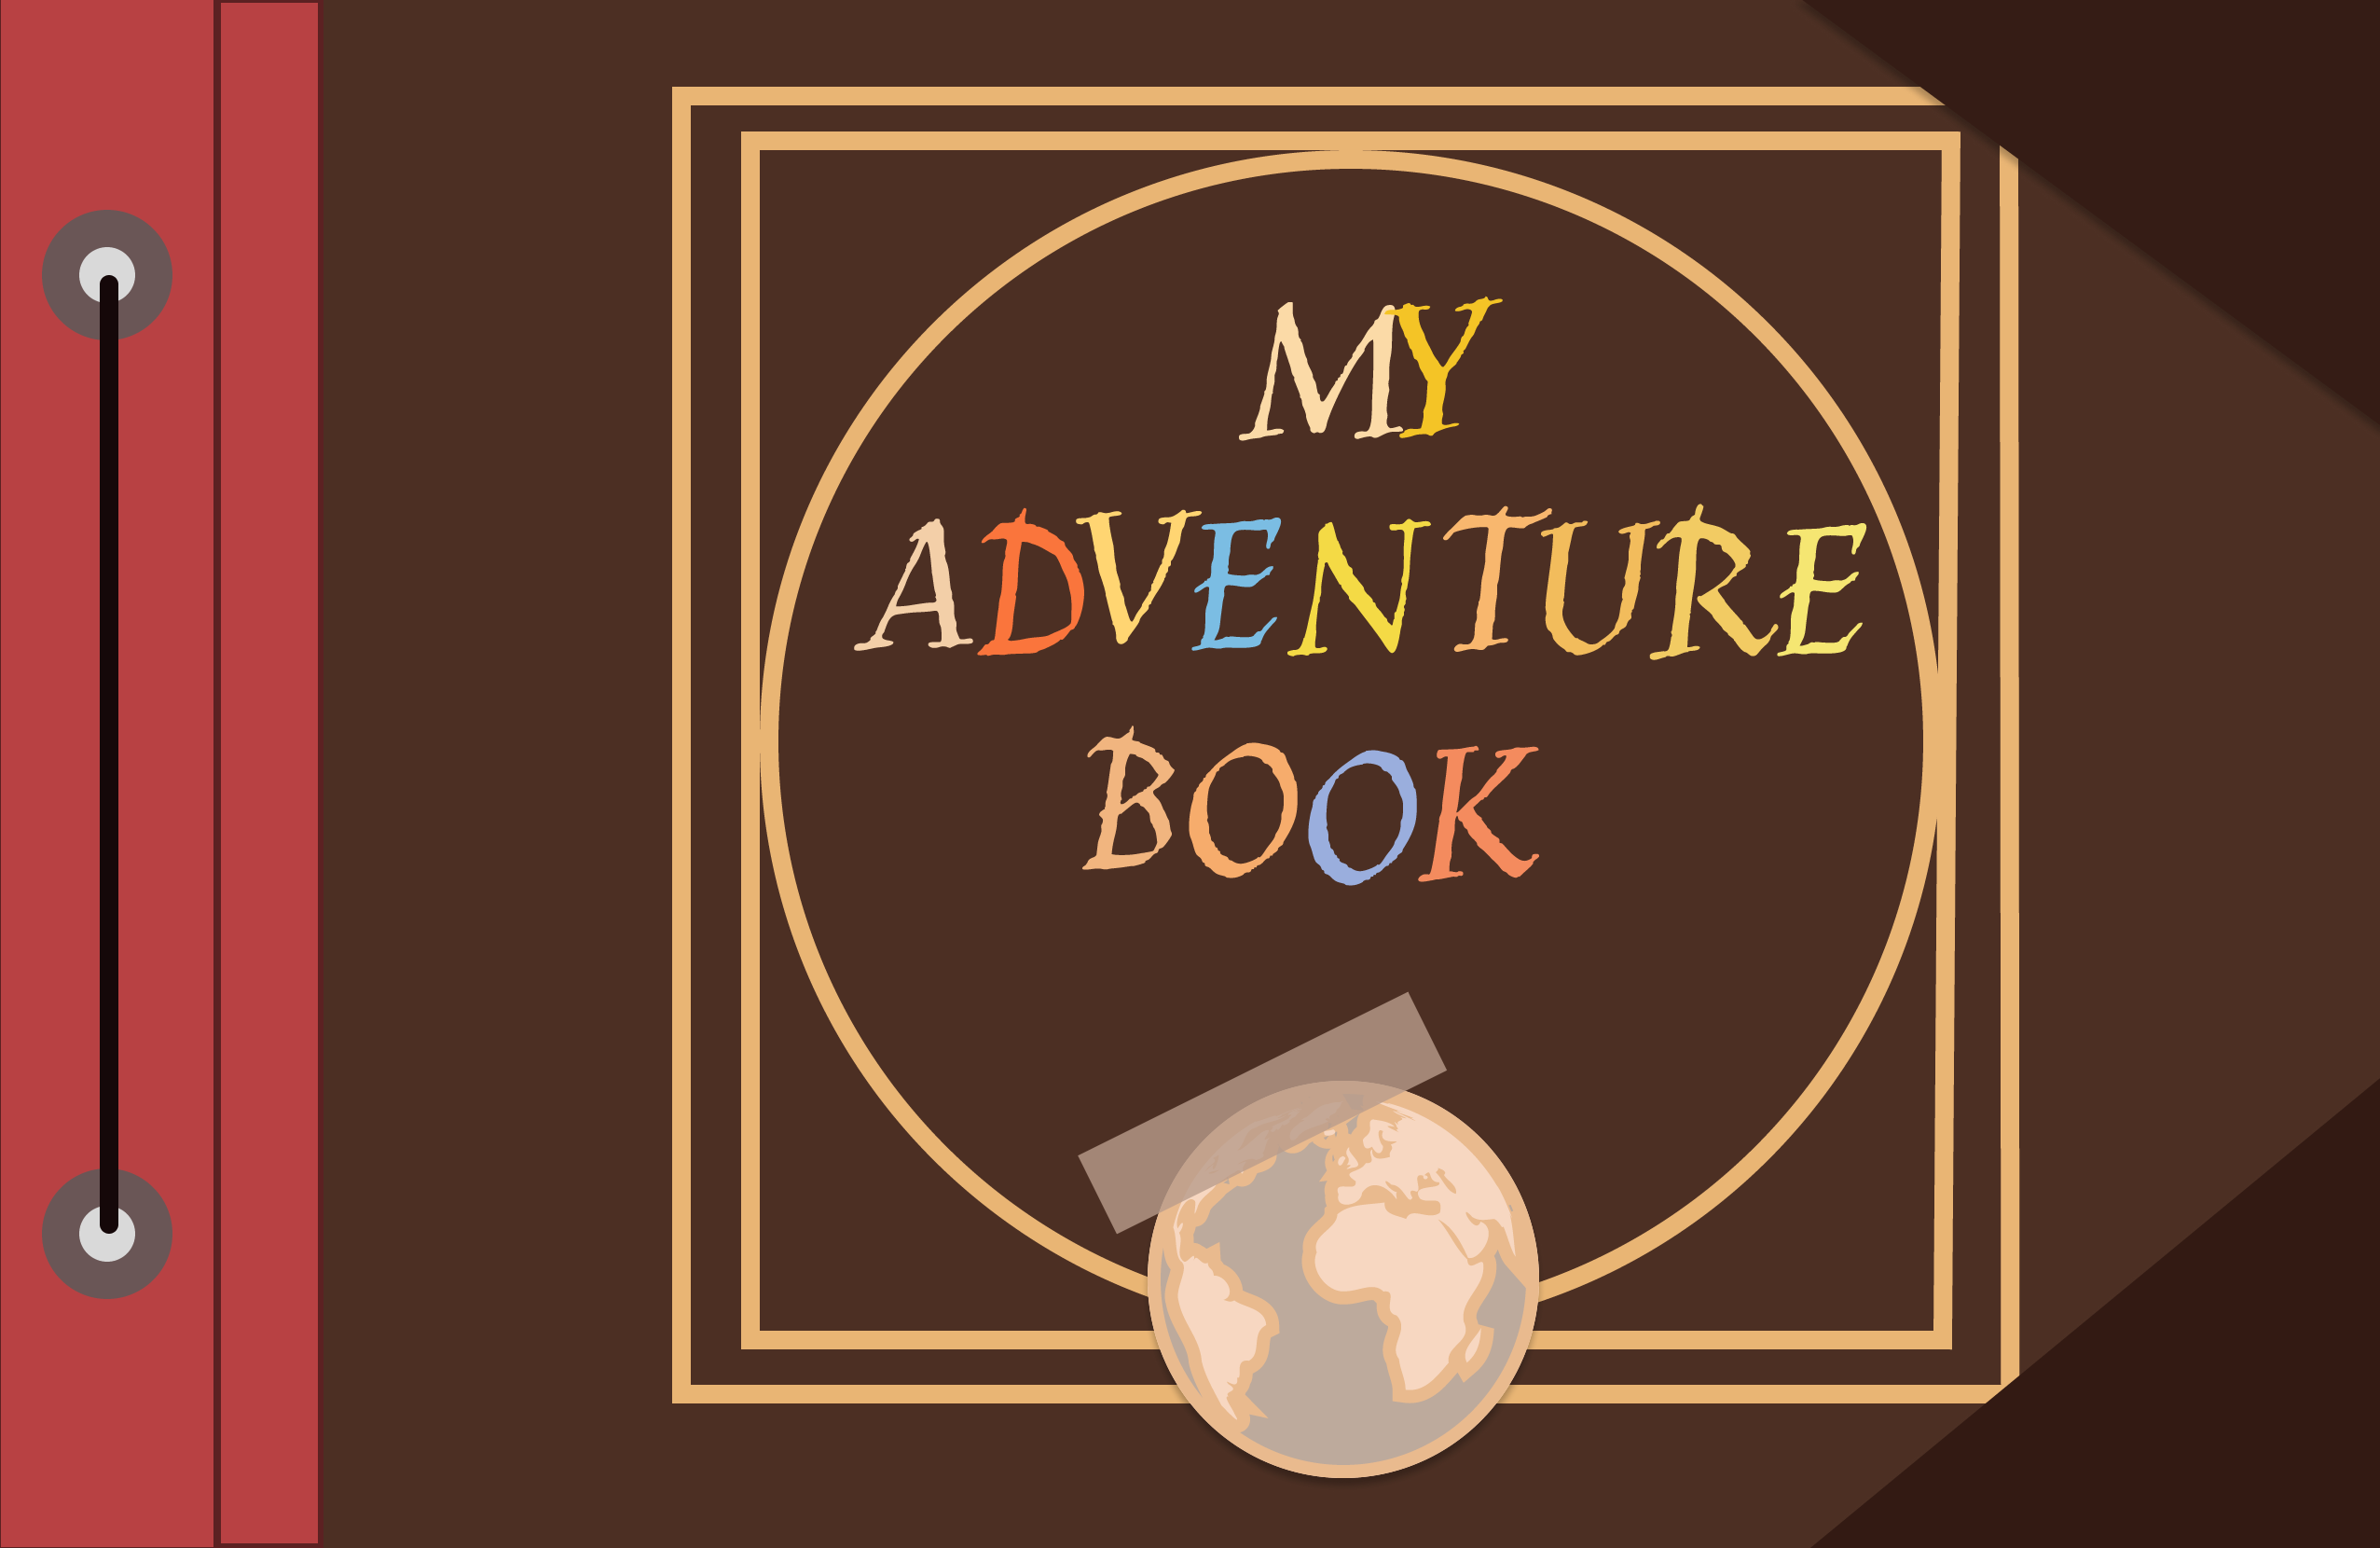 My Adventure Book by Rümeysa on Dribbble